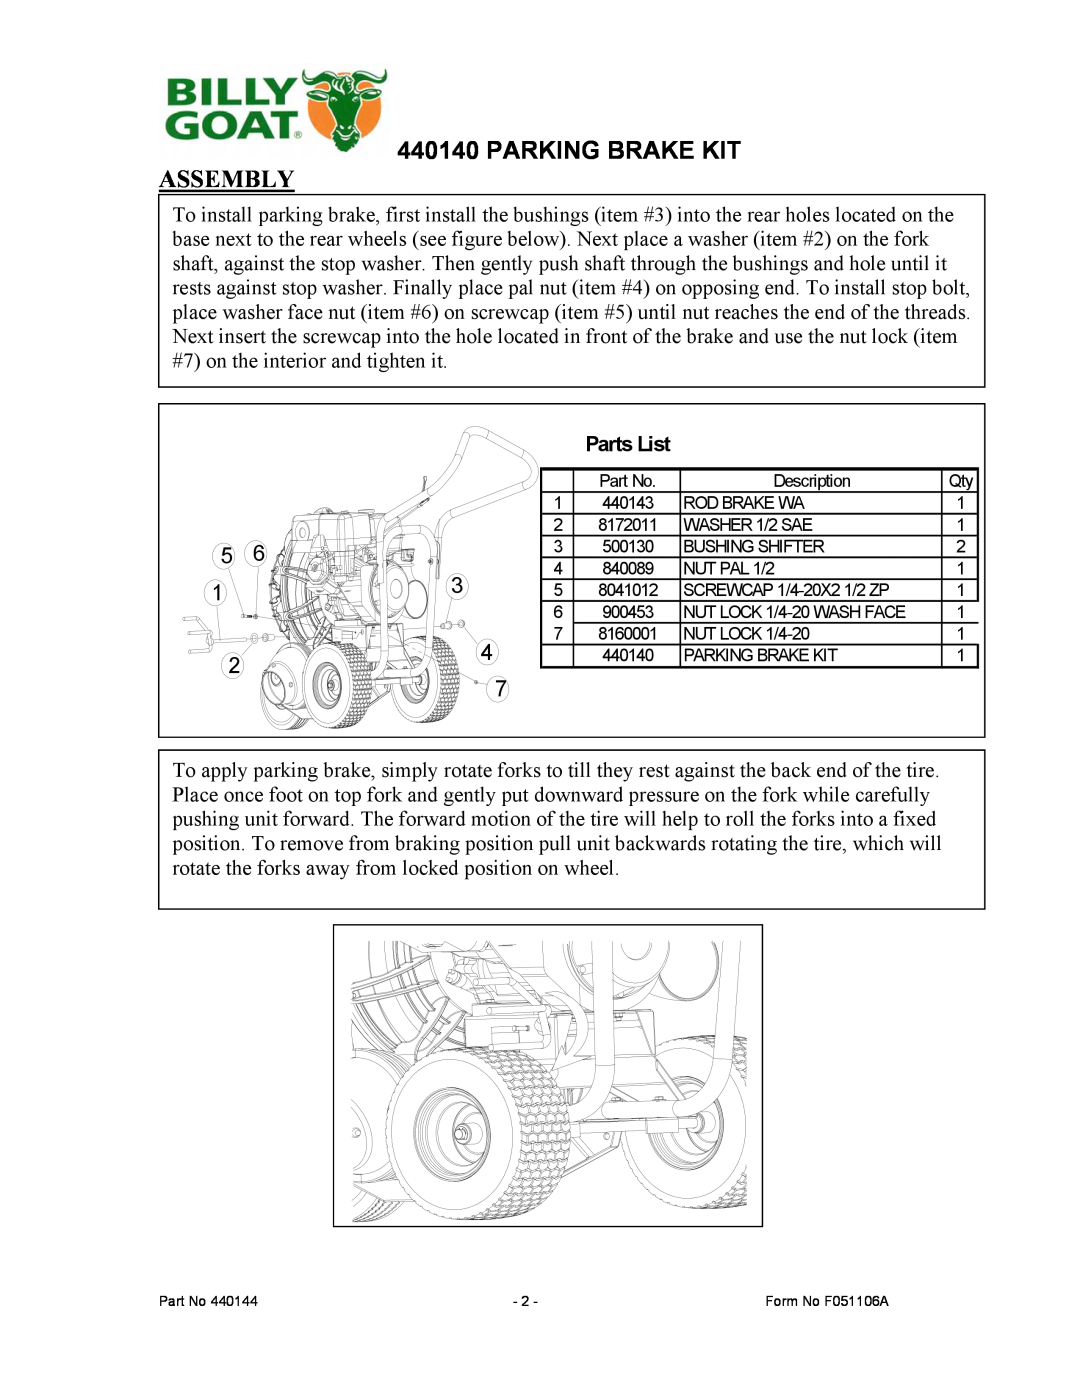 Billy Goat 440140 manual Parking Brake Kit, Assembly, Parts List 